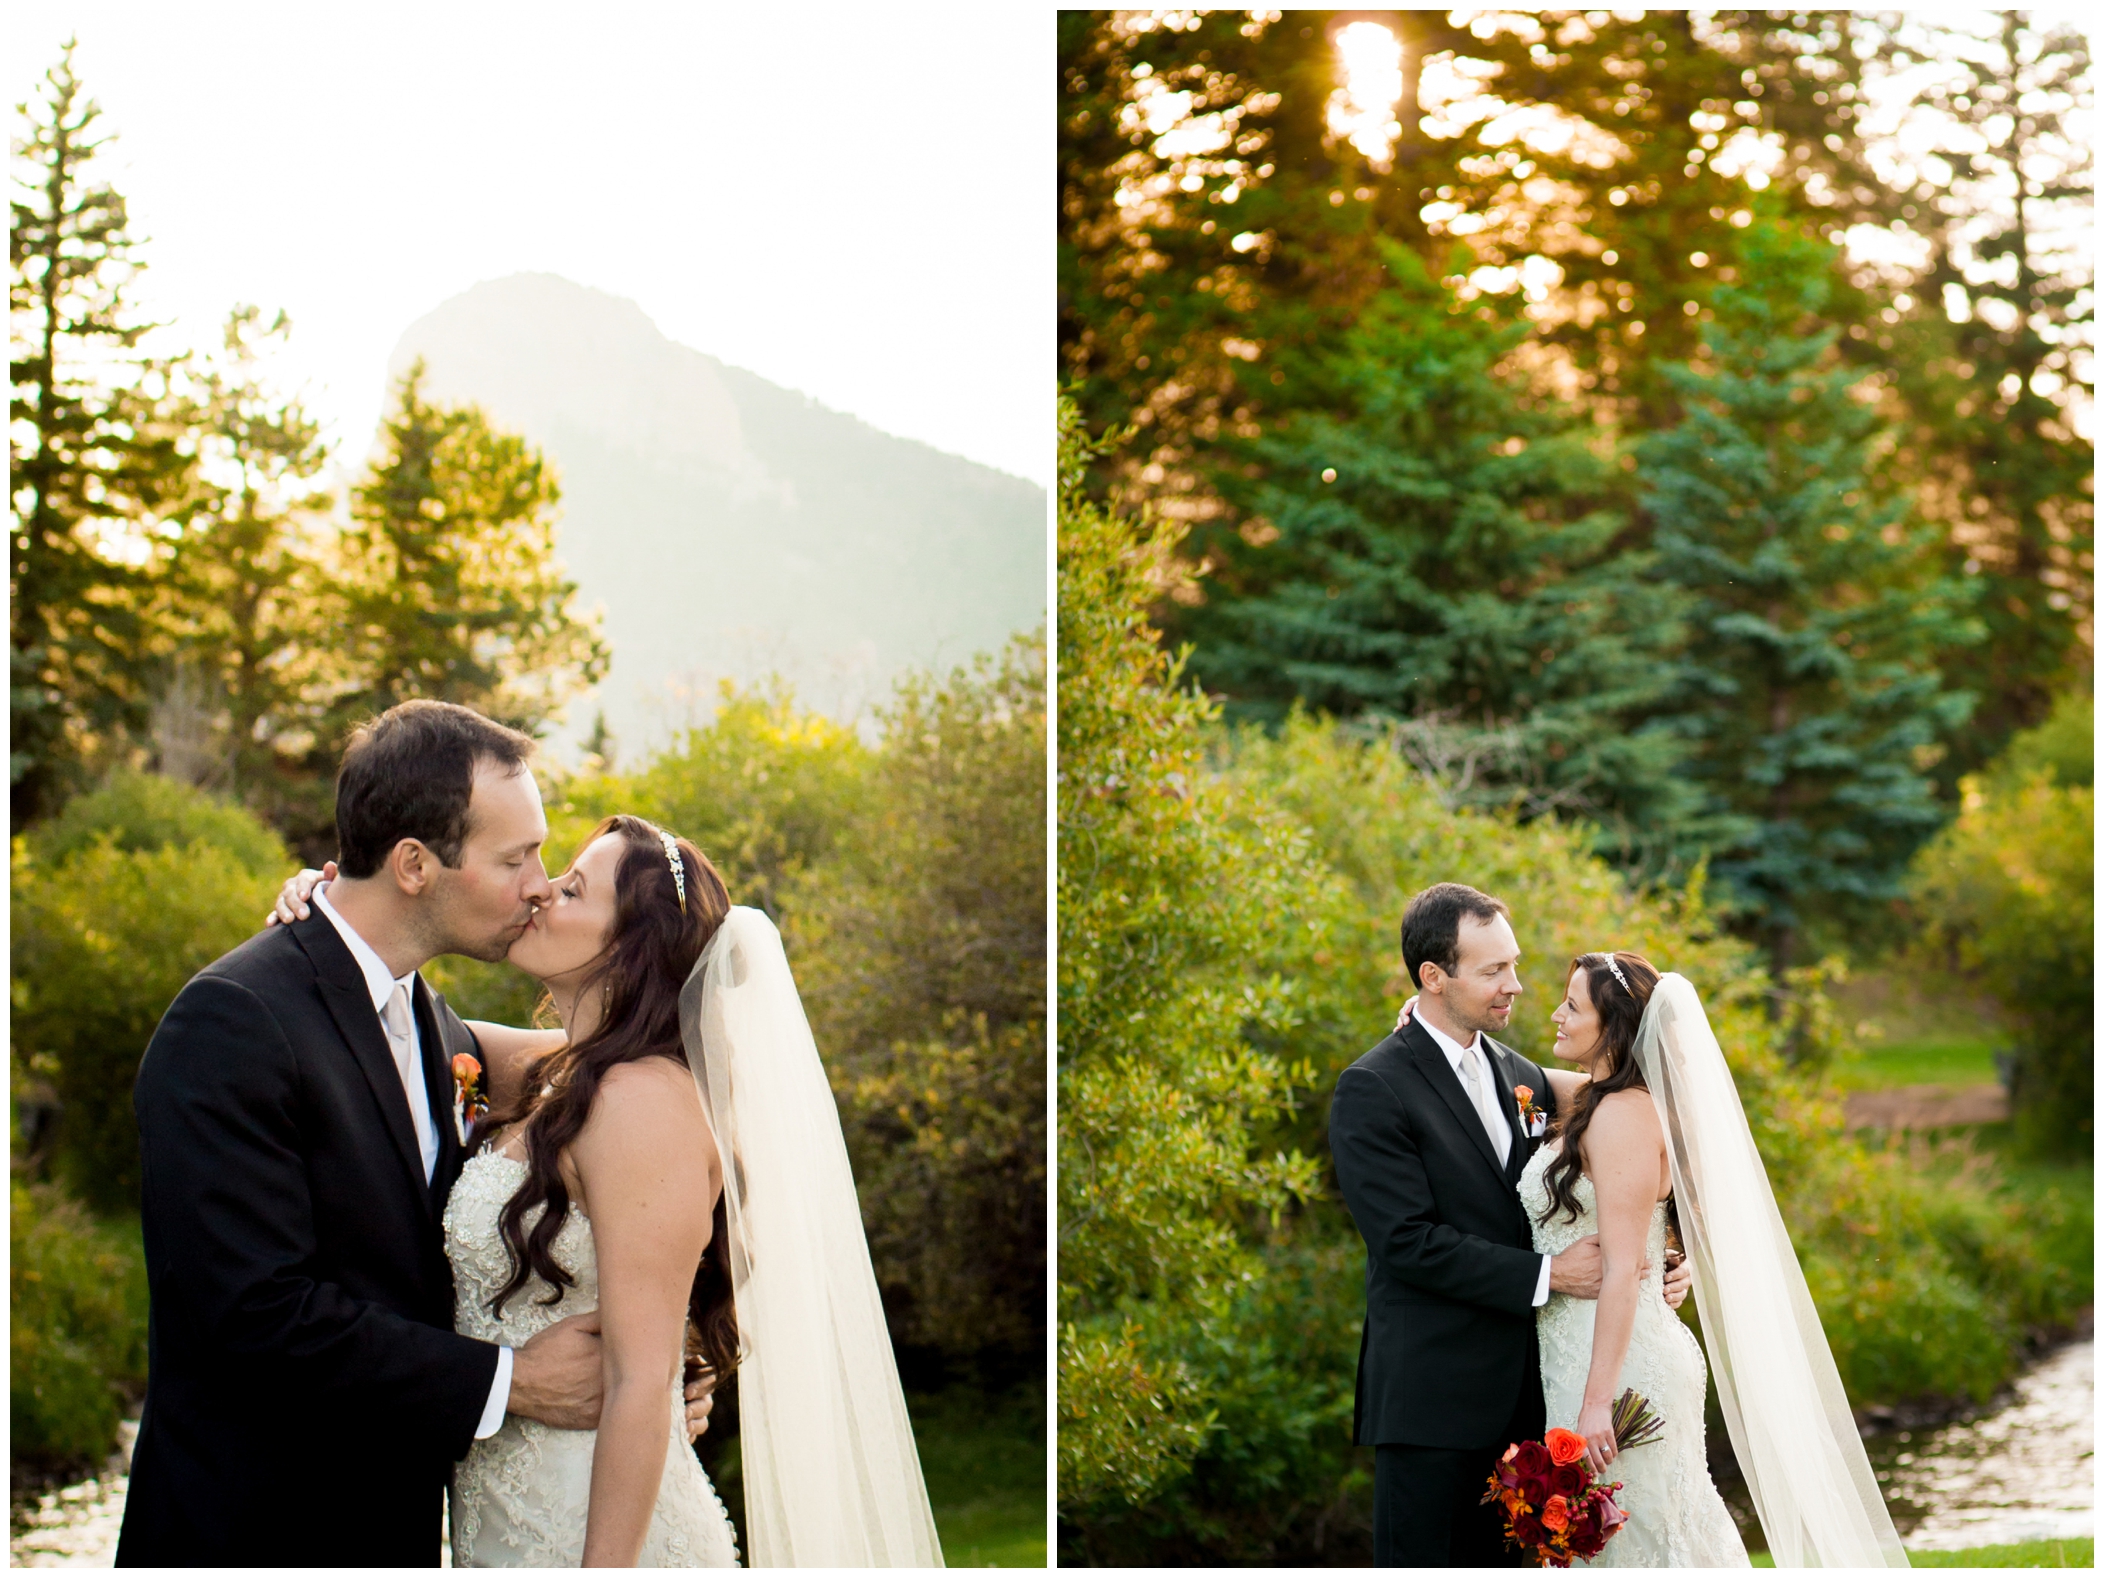 Colorado mountain wedding photography at Lower Lake Ranch